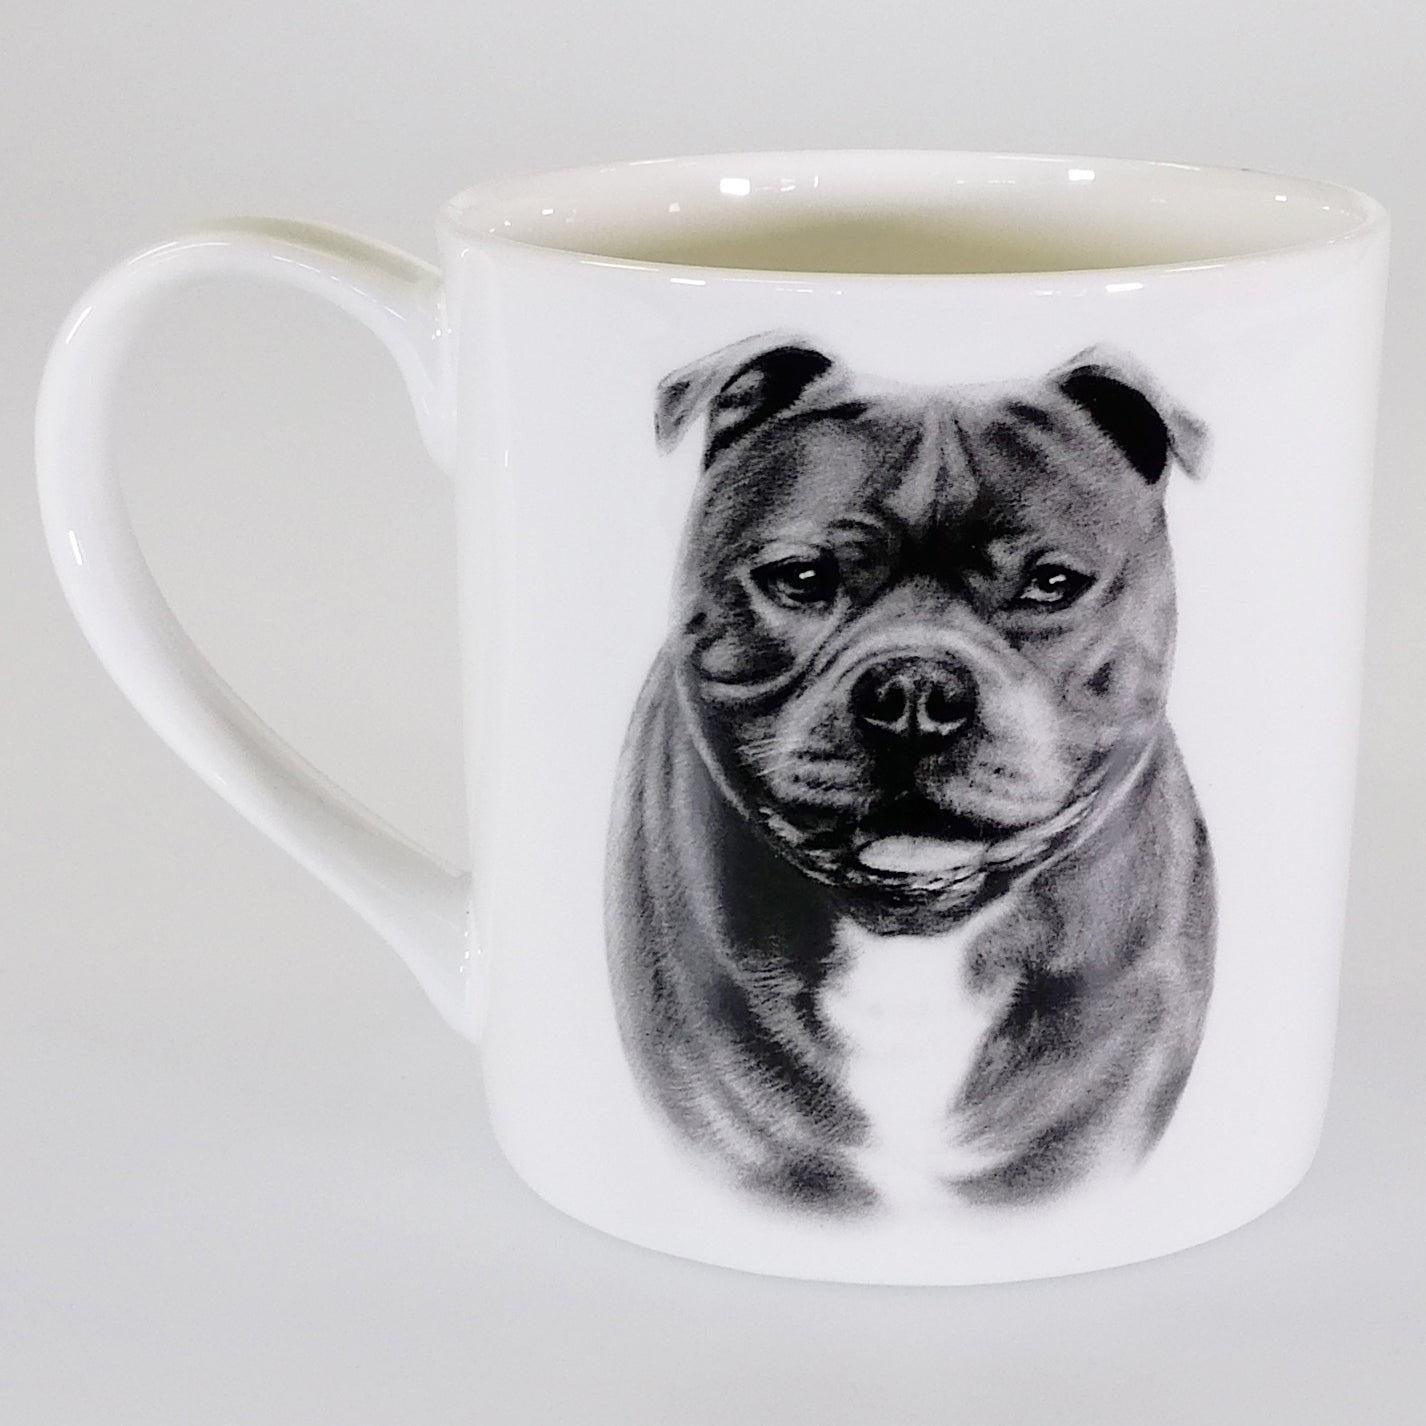 Staffordshire Bull Terrier - Delightful Dogs - Boxed Mug